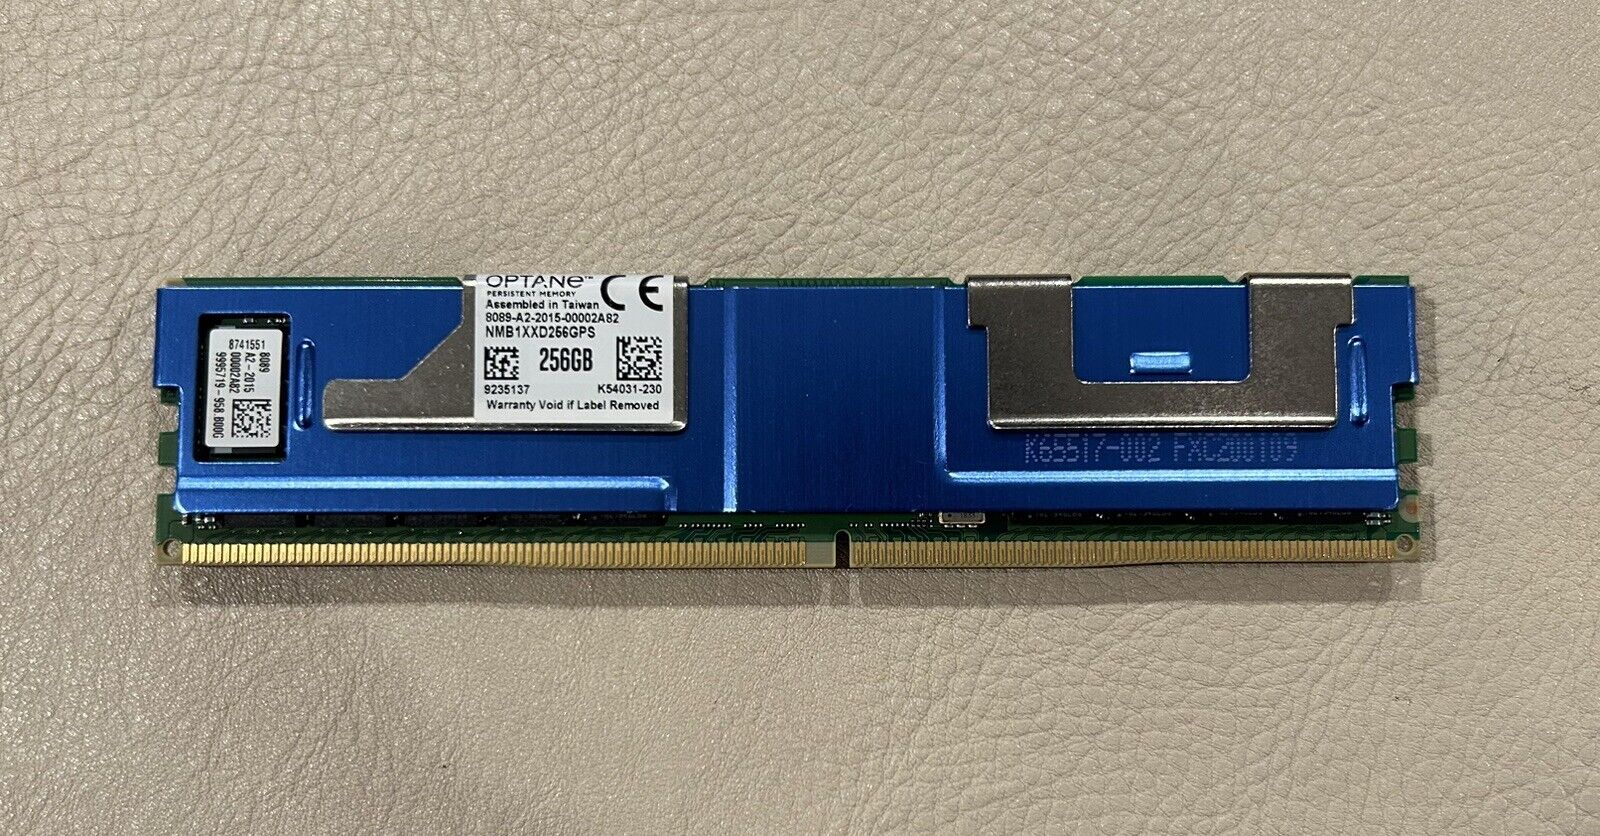 Intel Optane 256GB DDR4 288-Pin Persistent Memory Module NMB1XXD256GPS